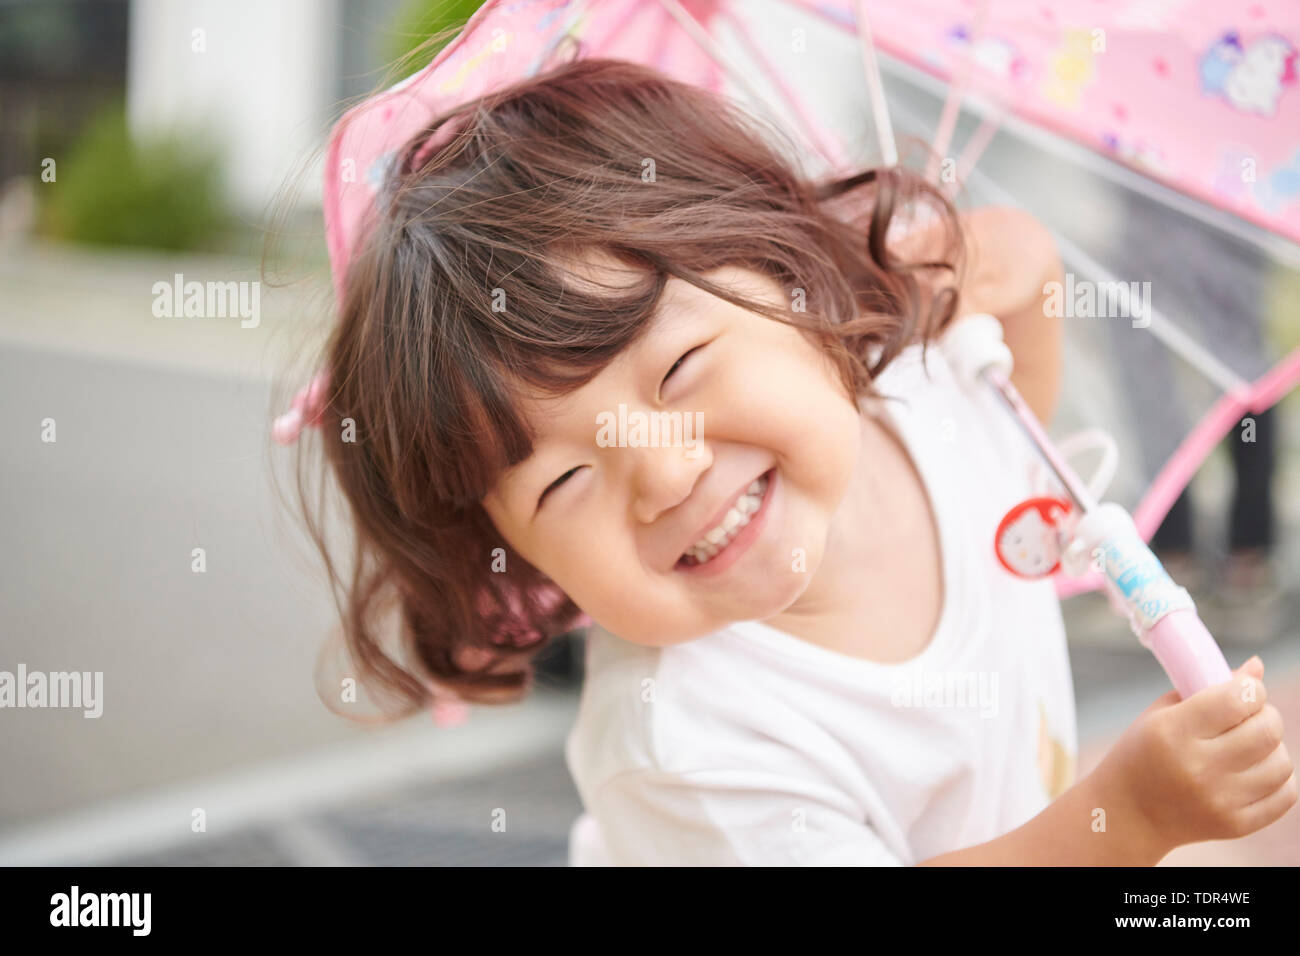 Japanese kid outside with umbrella Stock Photo